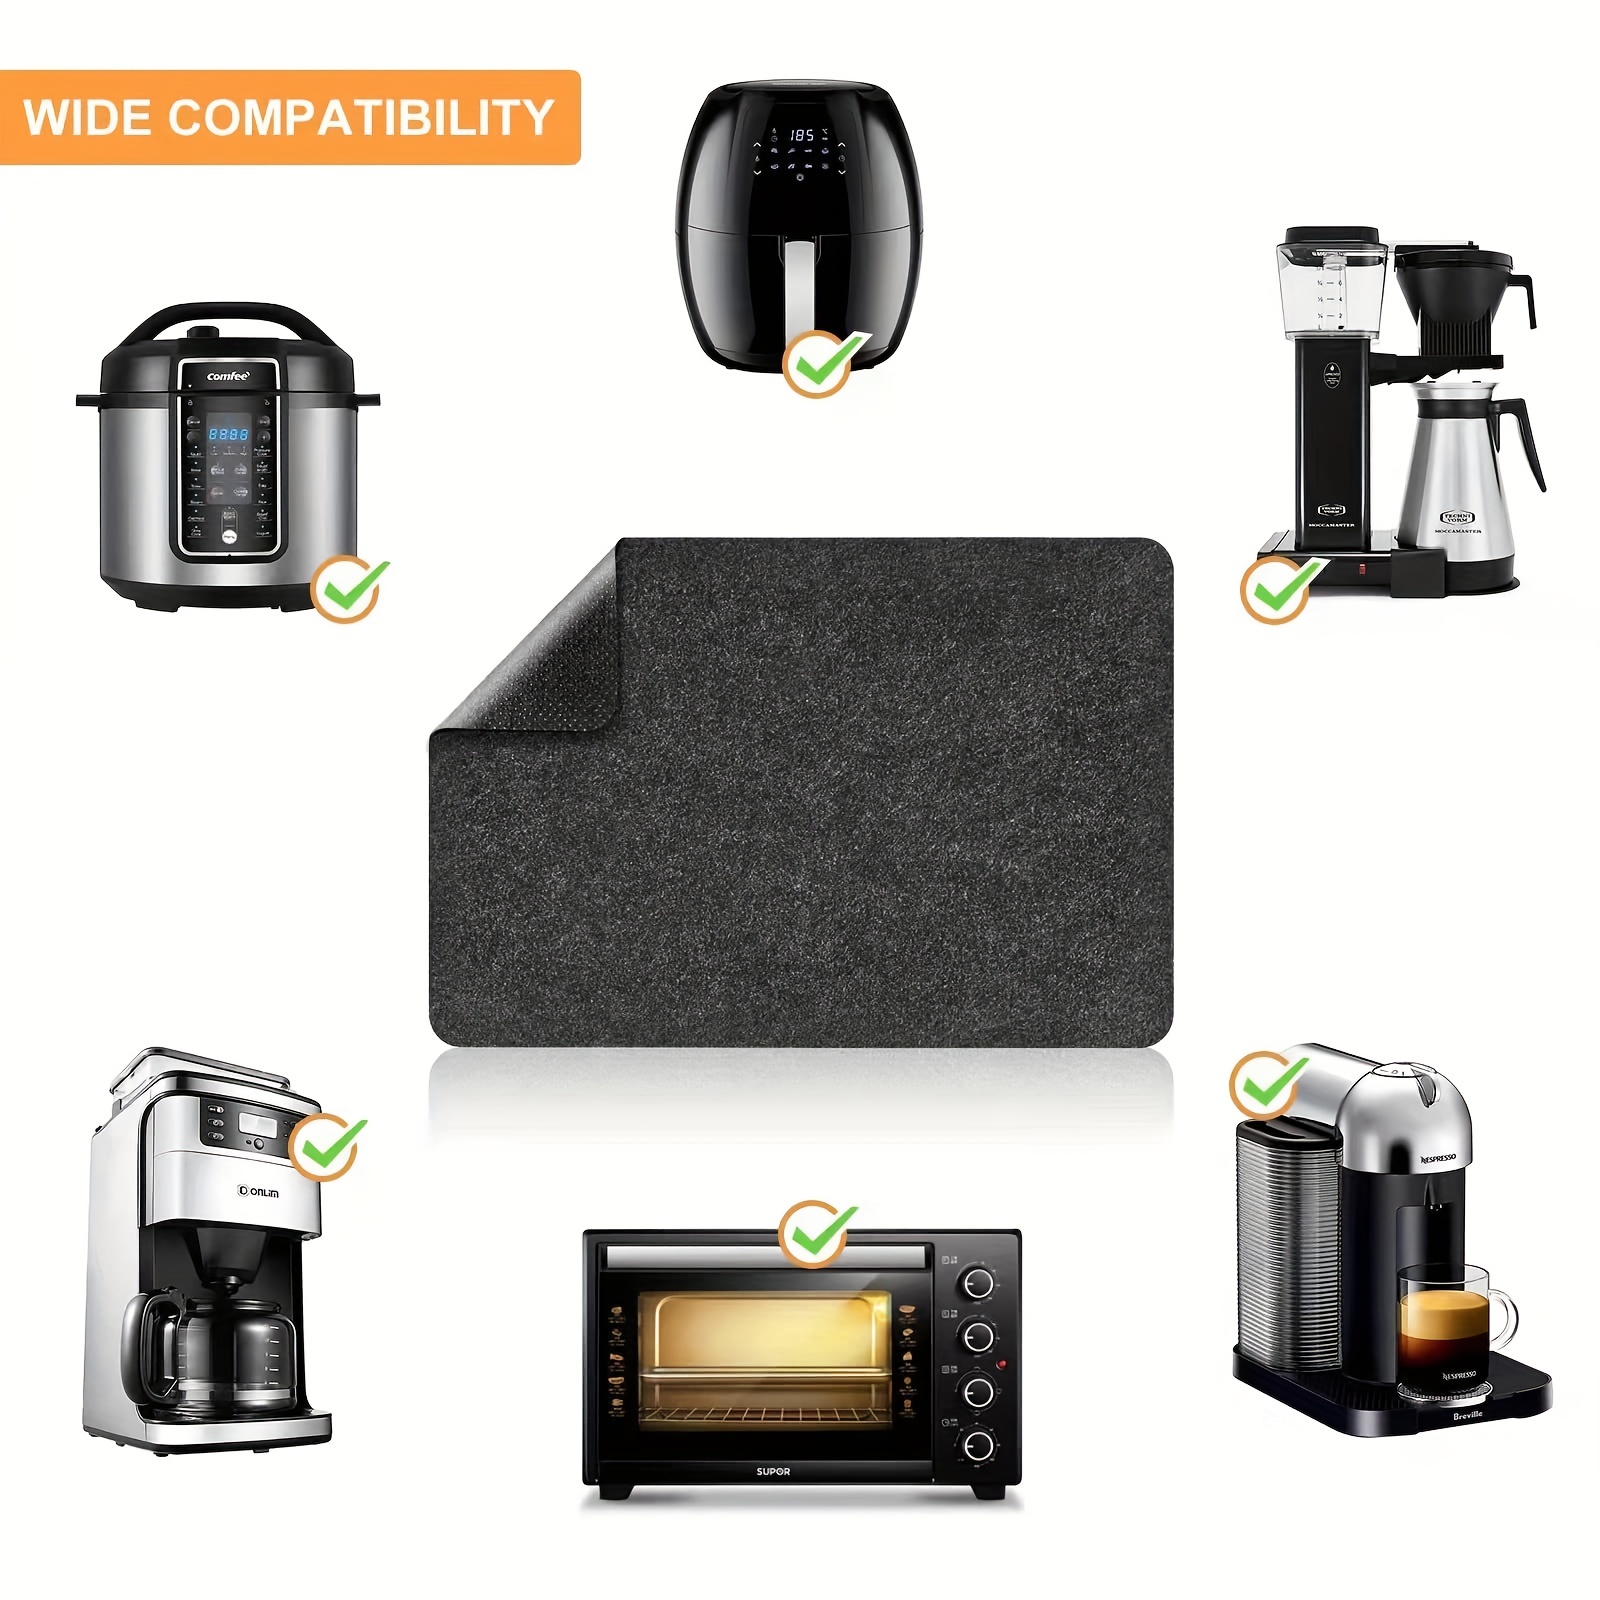 Kitchen Countertop Protector Appliance Slider Mat Air Fryer Heat Resistant Mat 2-Pack in Black